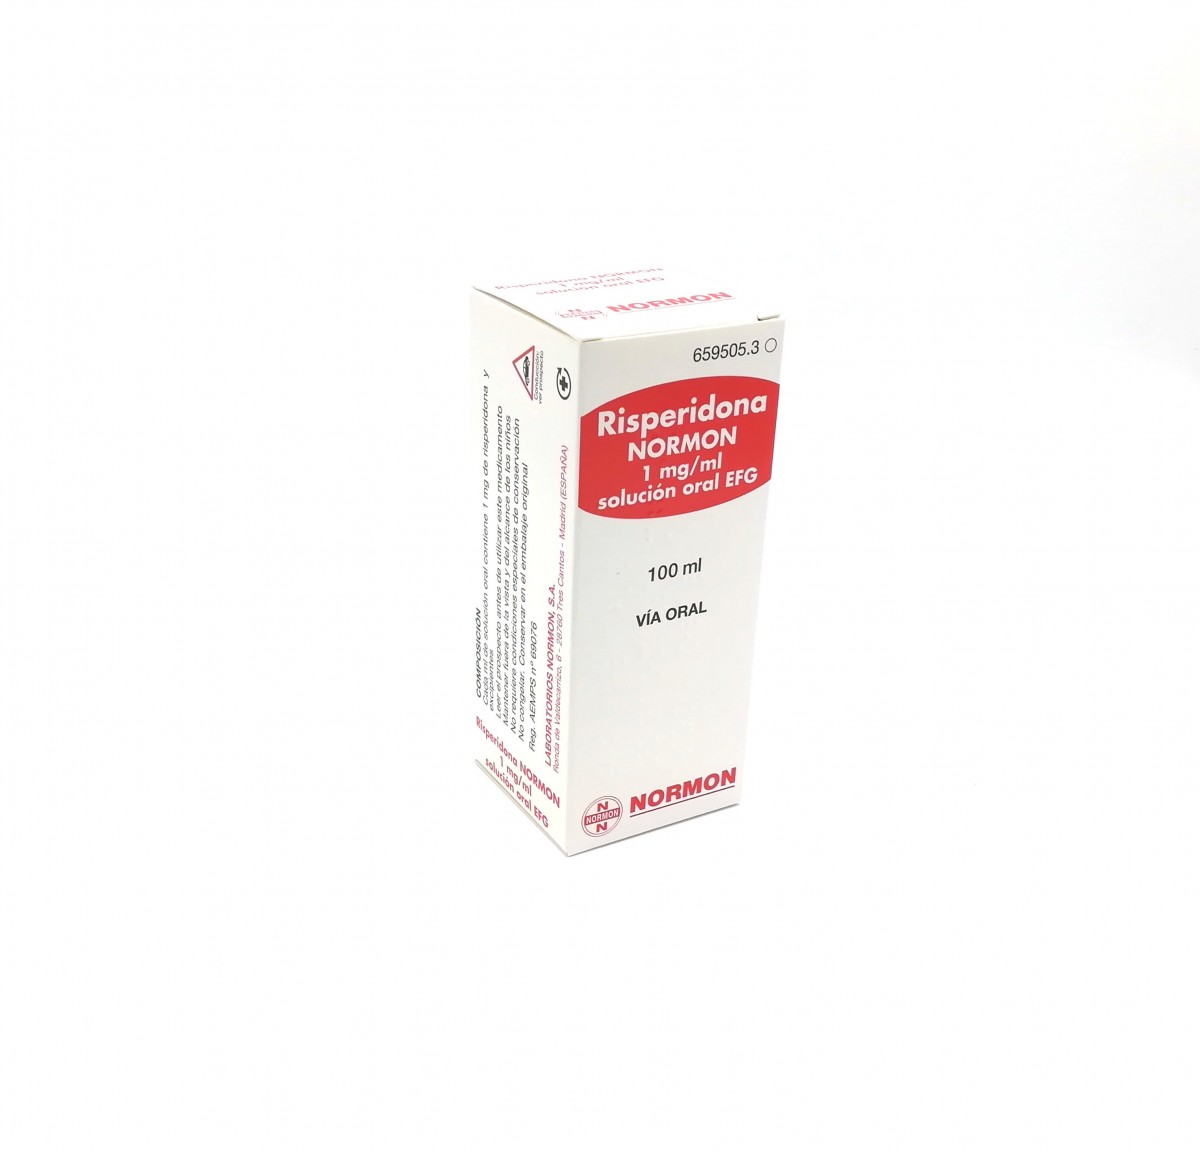 RISPERIDONA NORMON 1 mg/ml SOLUCION ORAL EFG, 1 frasco de 30 ml fotografía del envase.